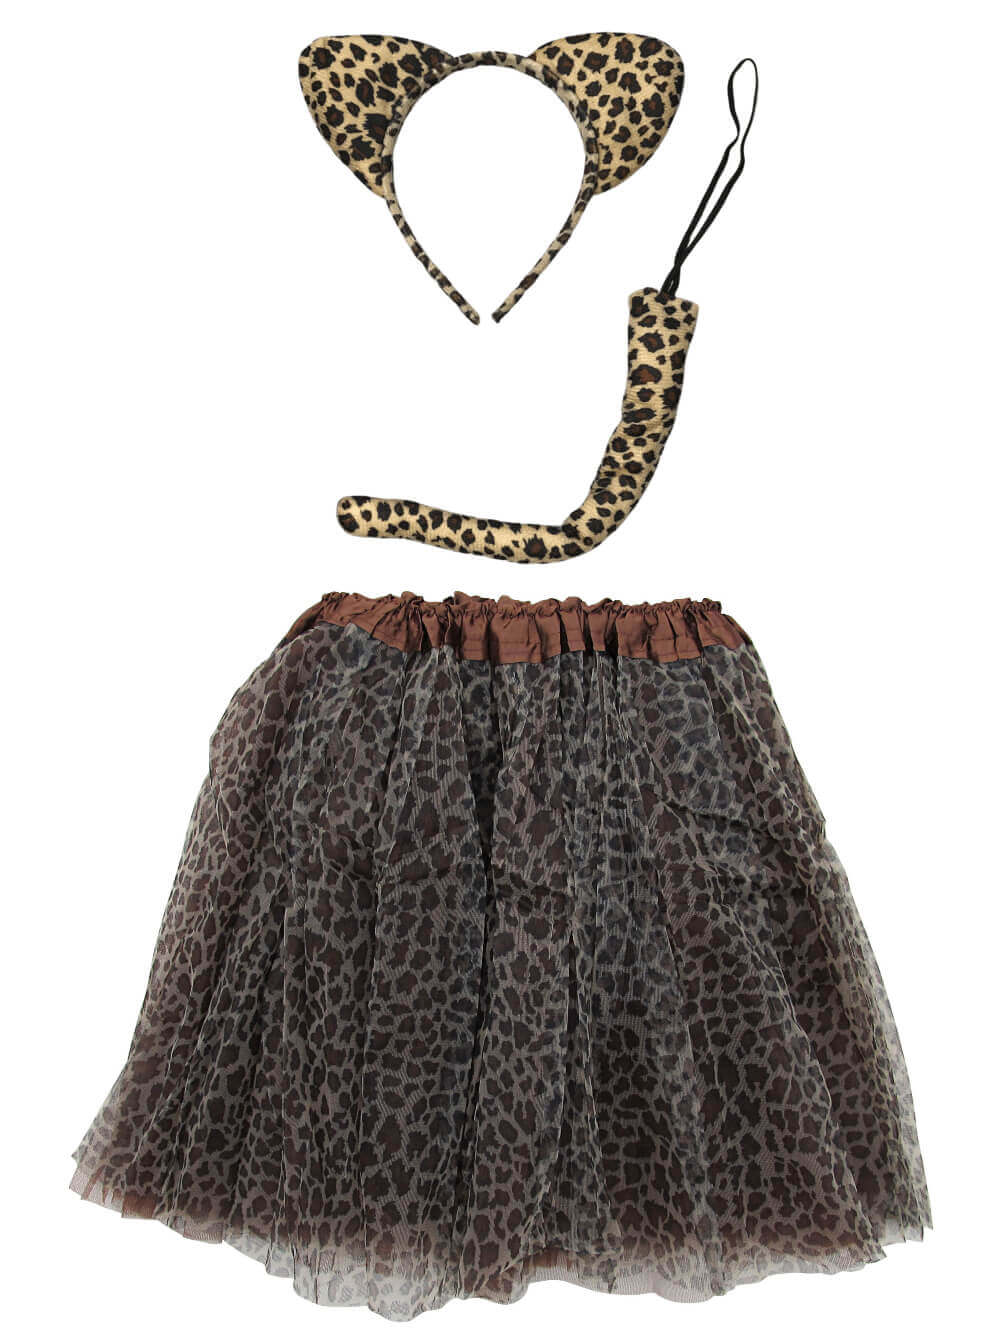 Adult Cheetah Costume or Leopard Costume - Tutu Skirt, Tail, & Headband Set for Adult or Plus Size - Sydney So Sweet